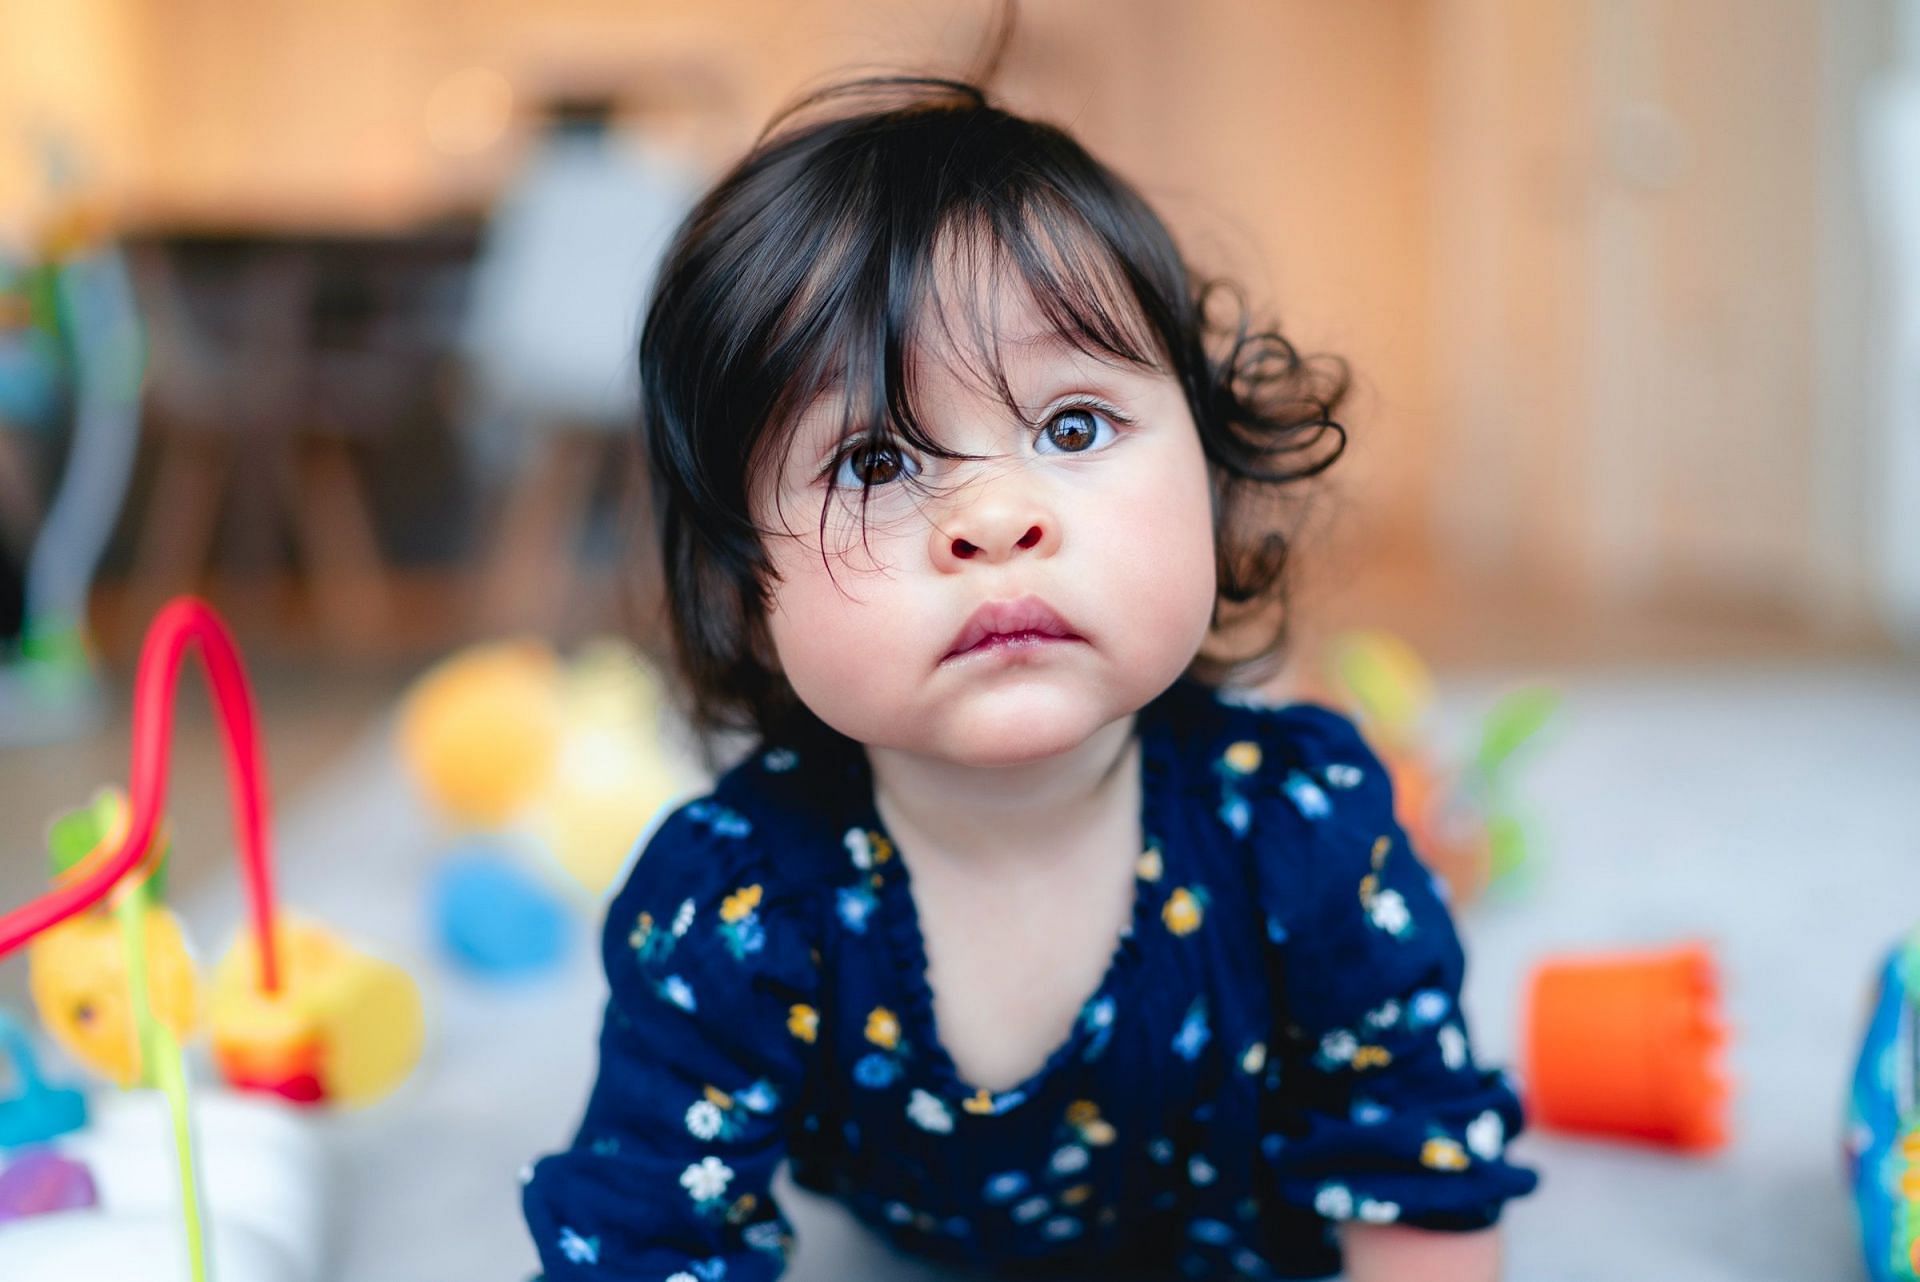 Home remedies for cough in a toddler (Image via Unsplash/Juan Encalada)